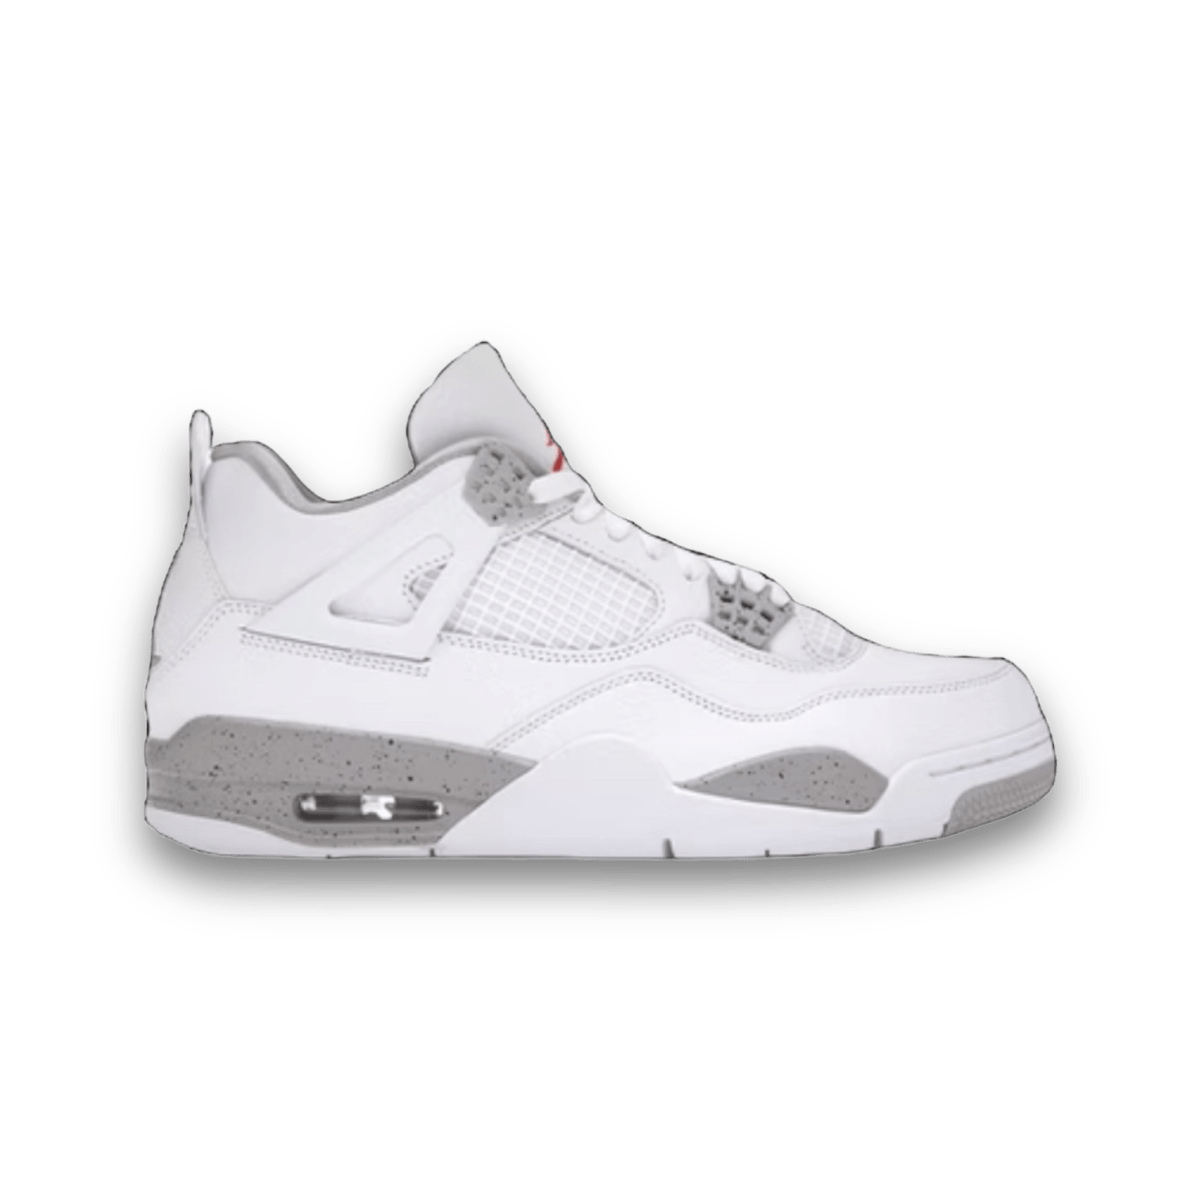 Jordan 4 Retro White Oreo (2021) - Mid Sneaker - Jordan - Jawns on Fire